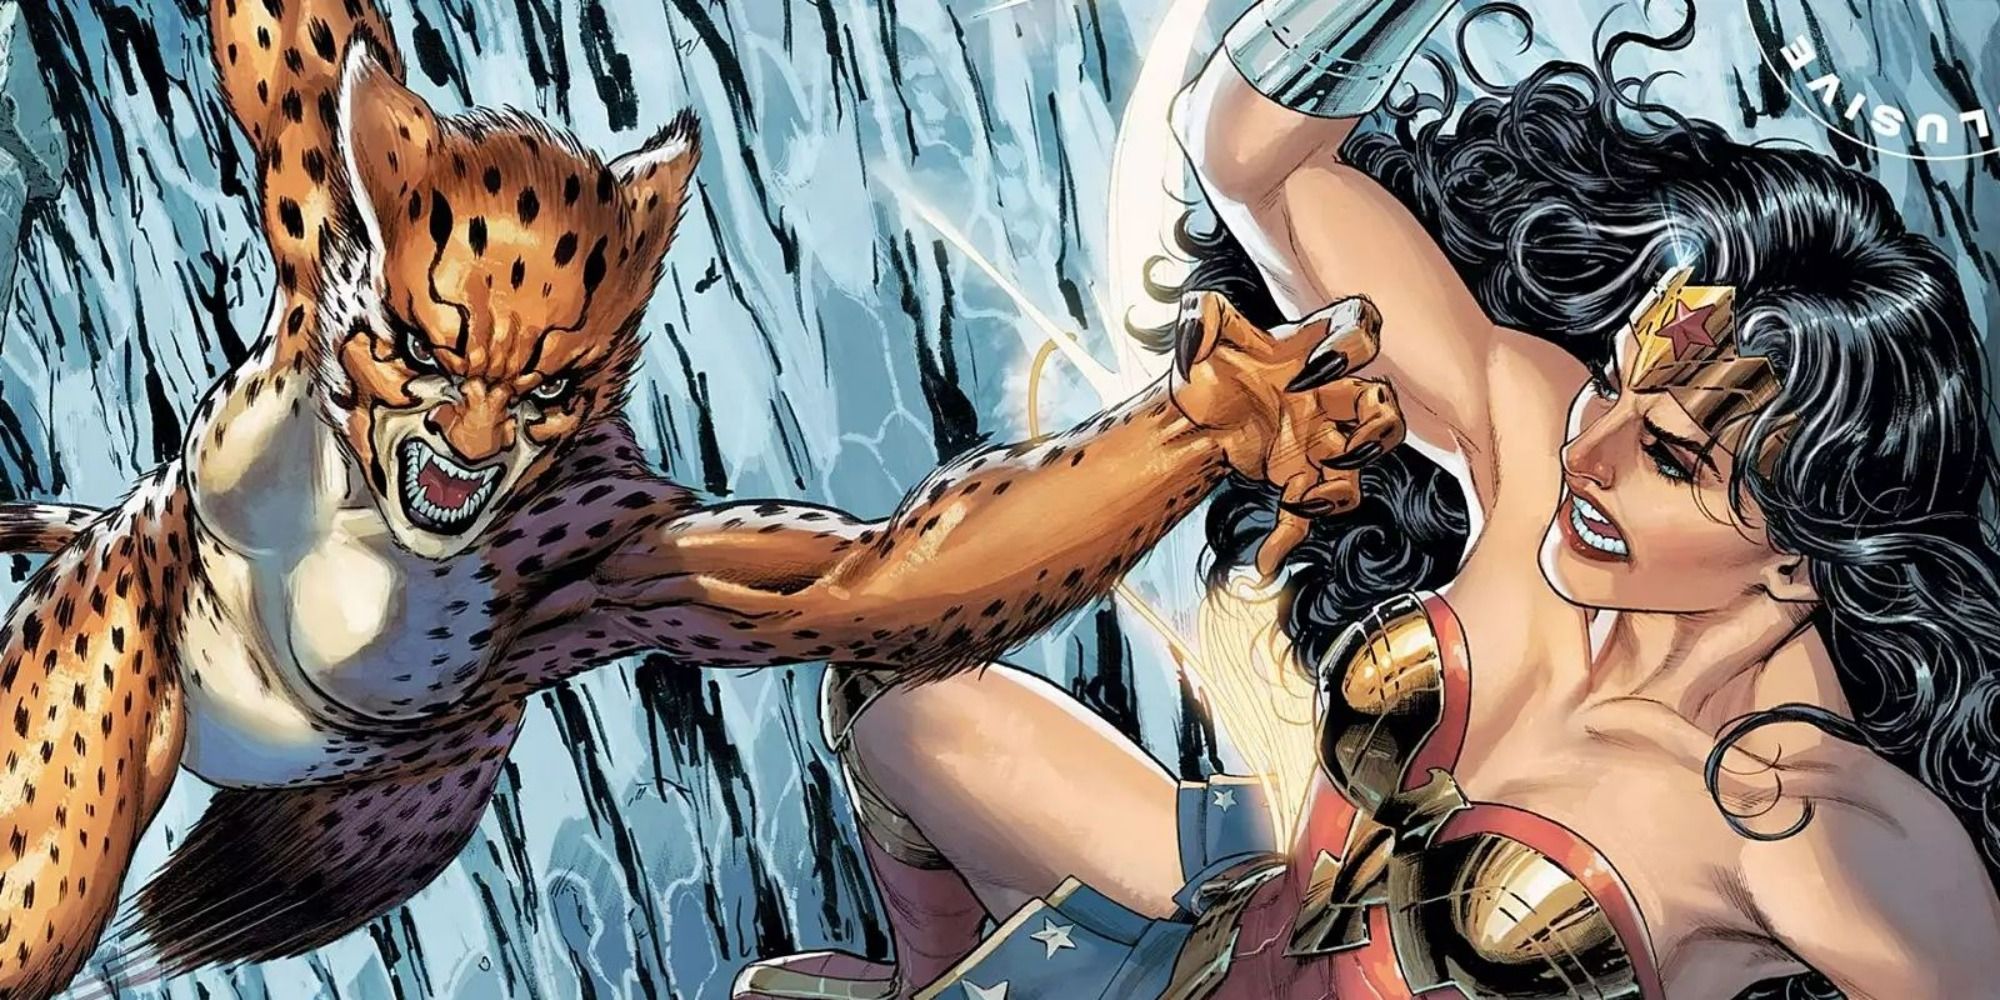 Wonder Woman and Cheetah villain in a tense fight